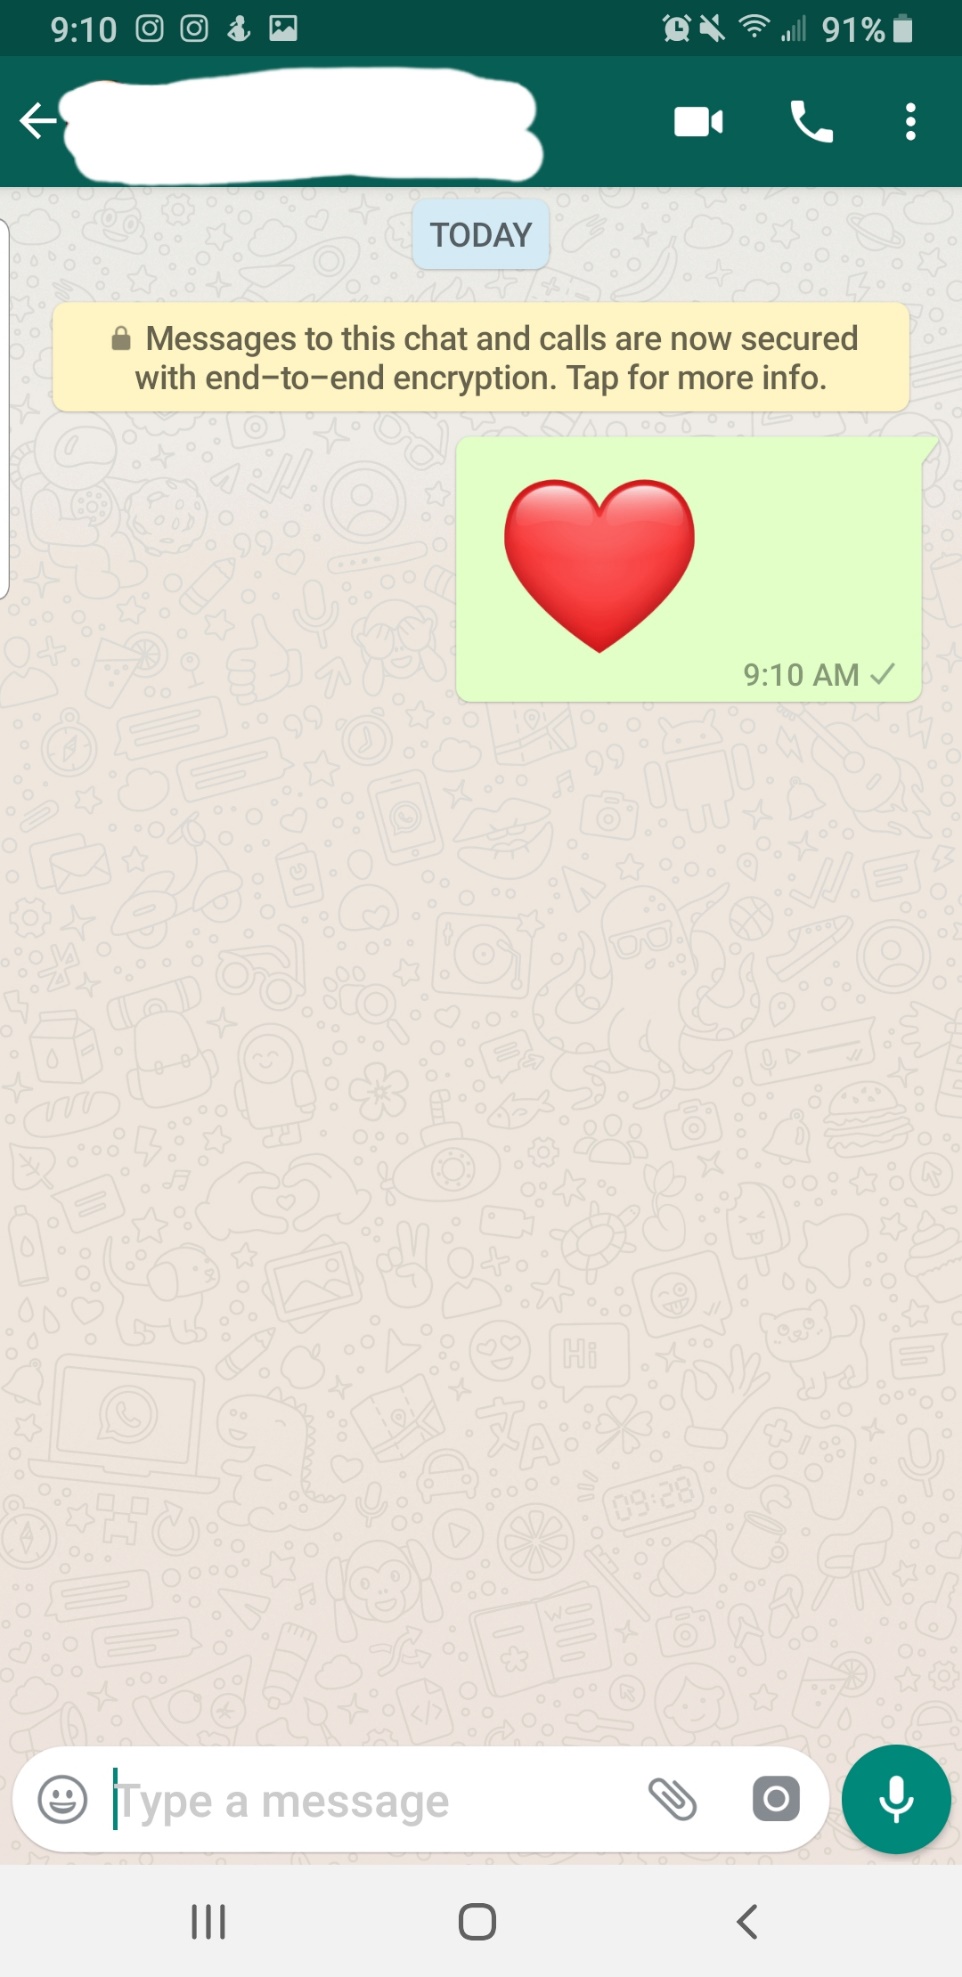 Sharing red heart emoji may lead to jail in Saudi Arabia: Report